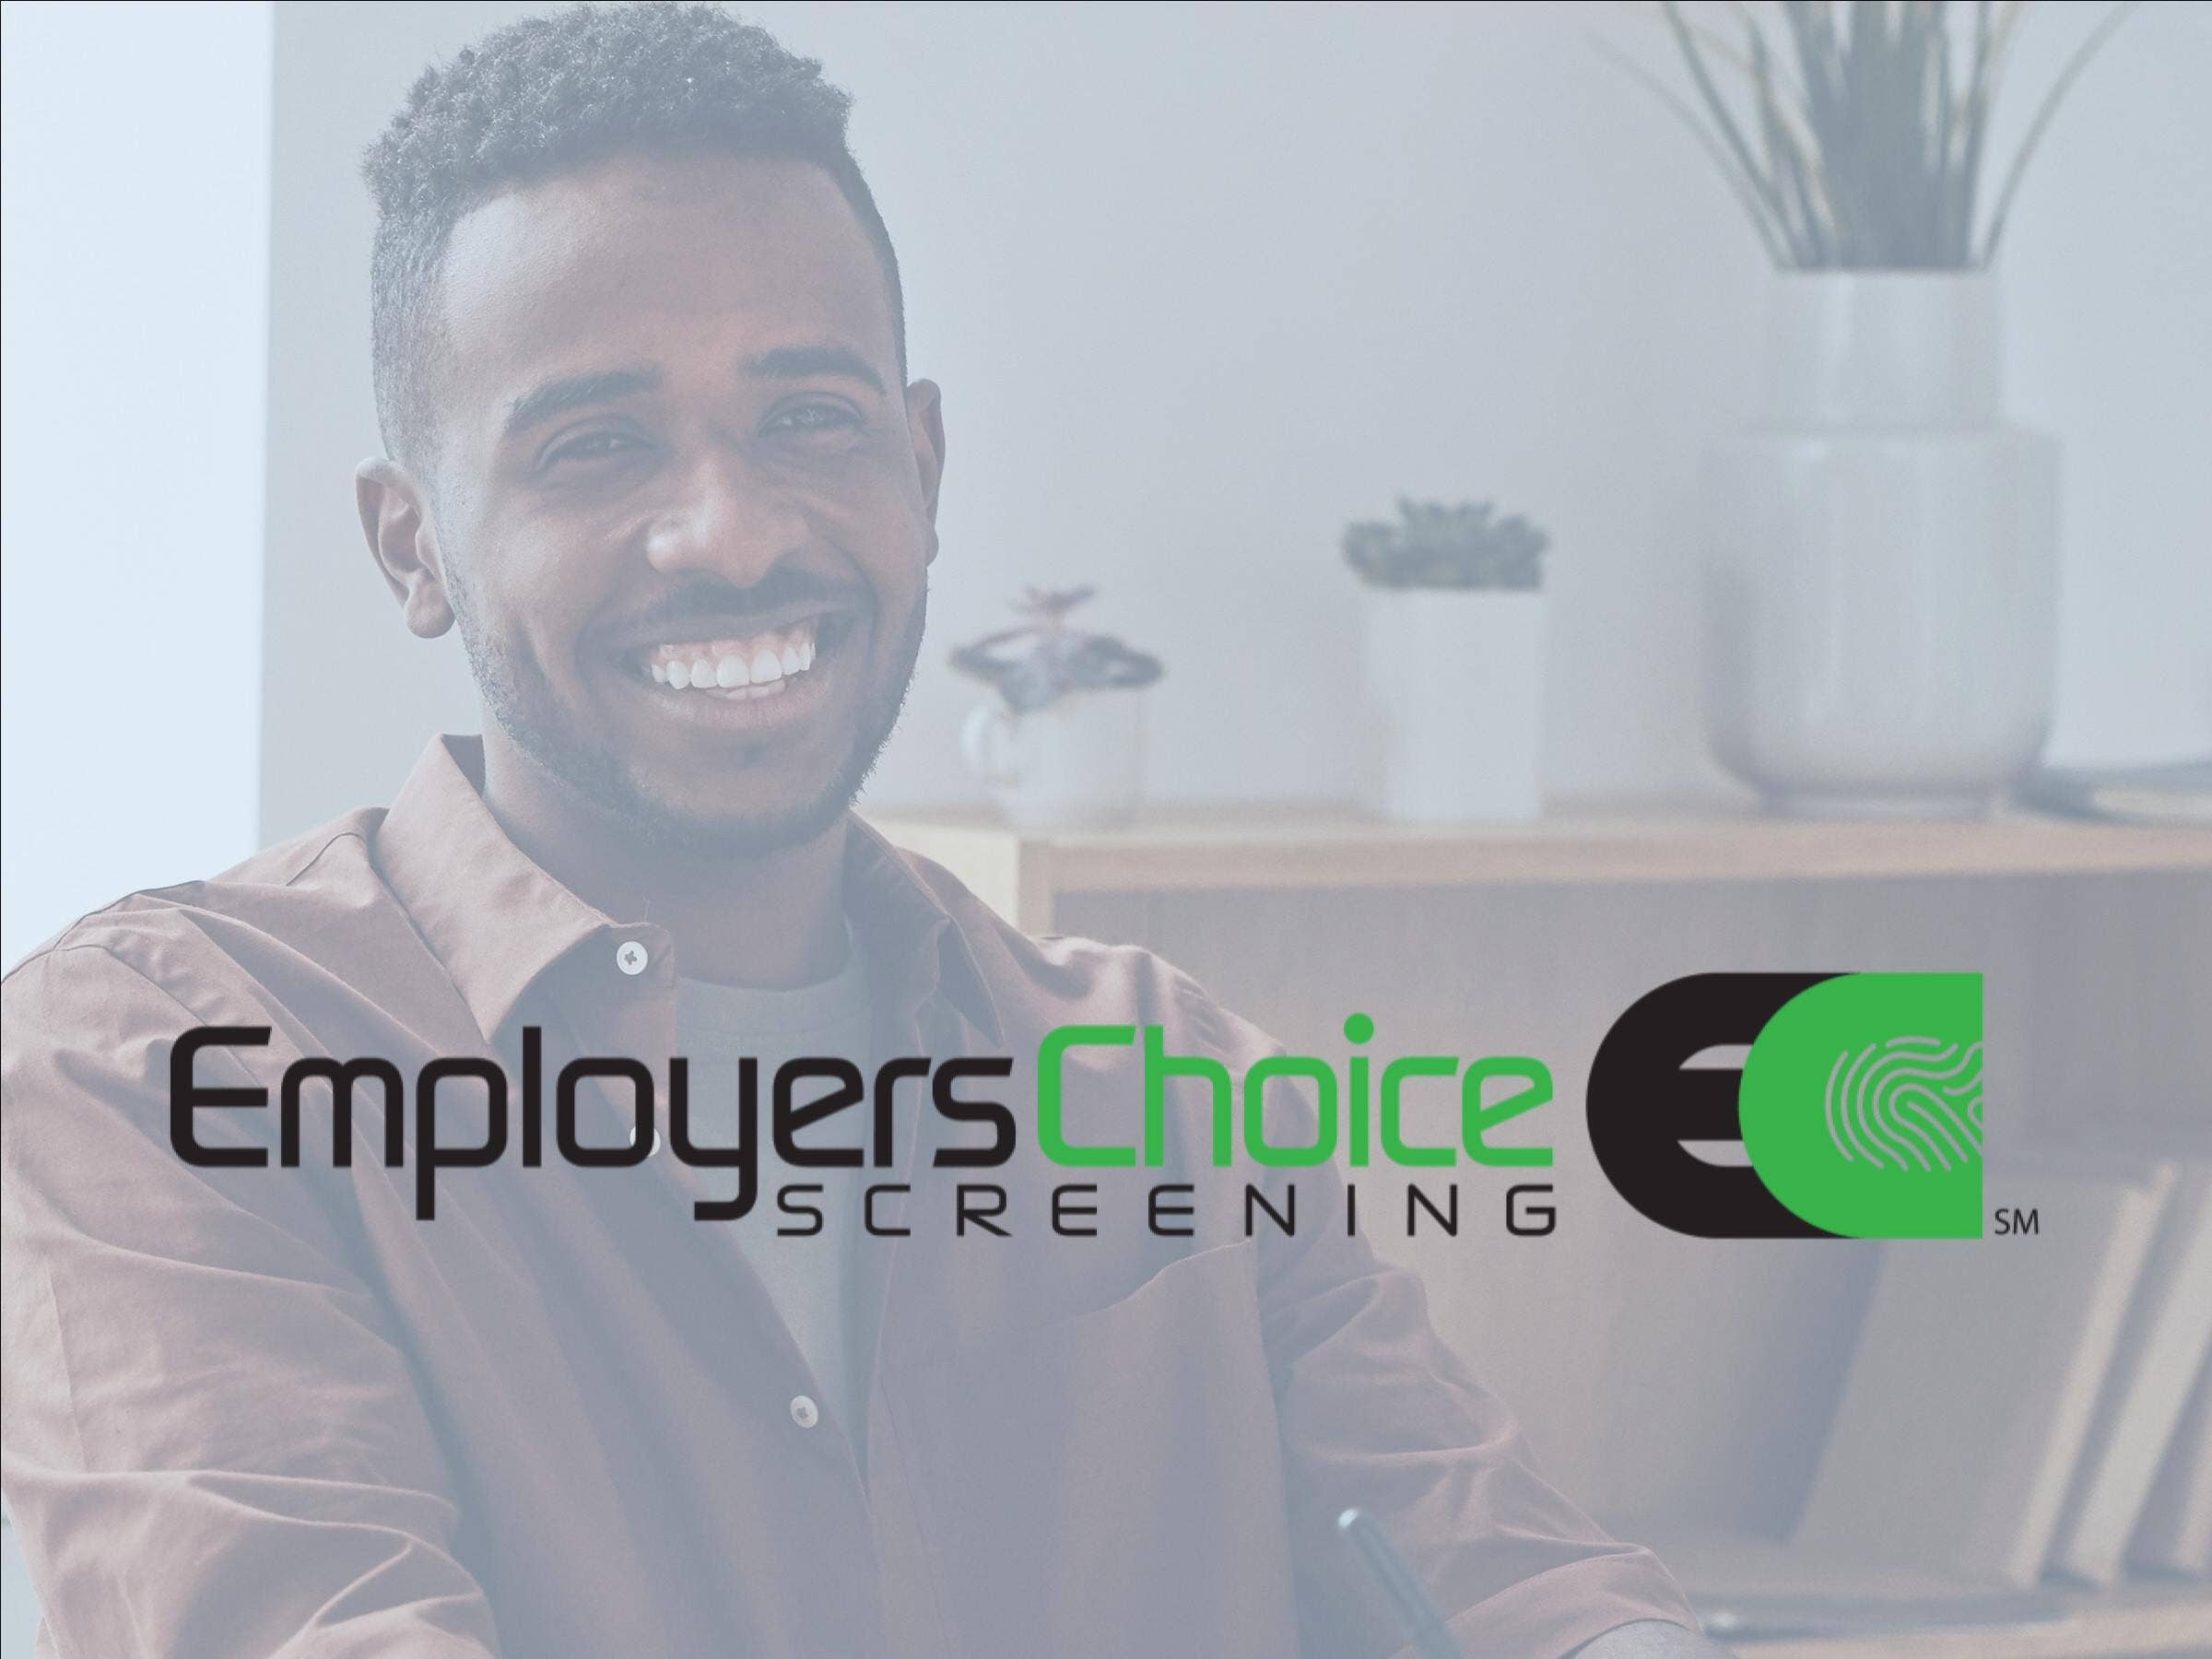 Employers Choice Screening